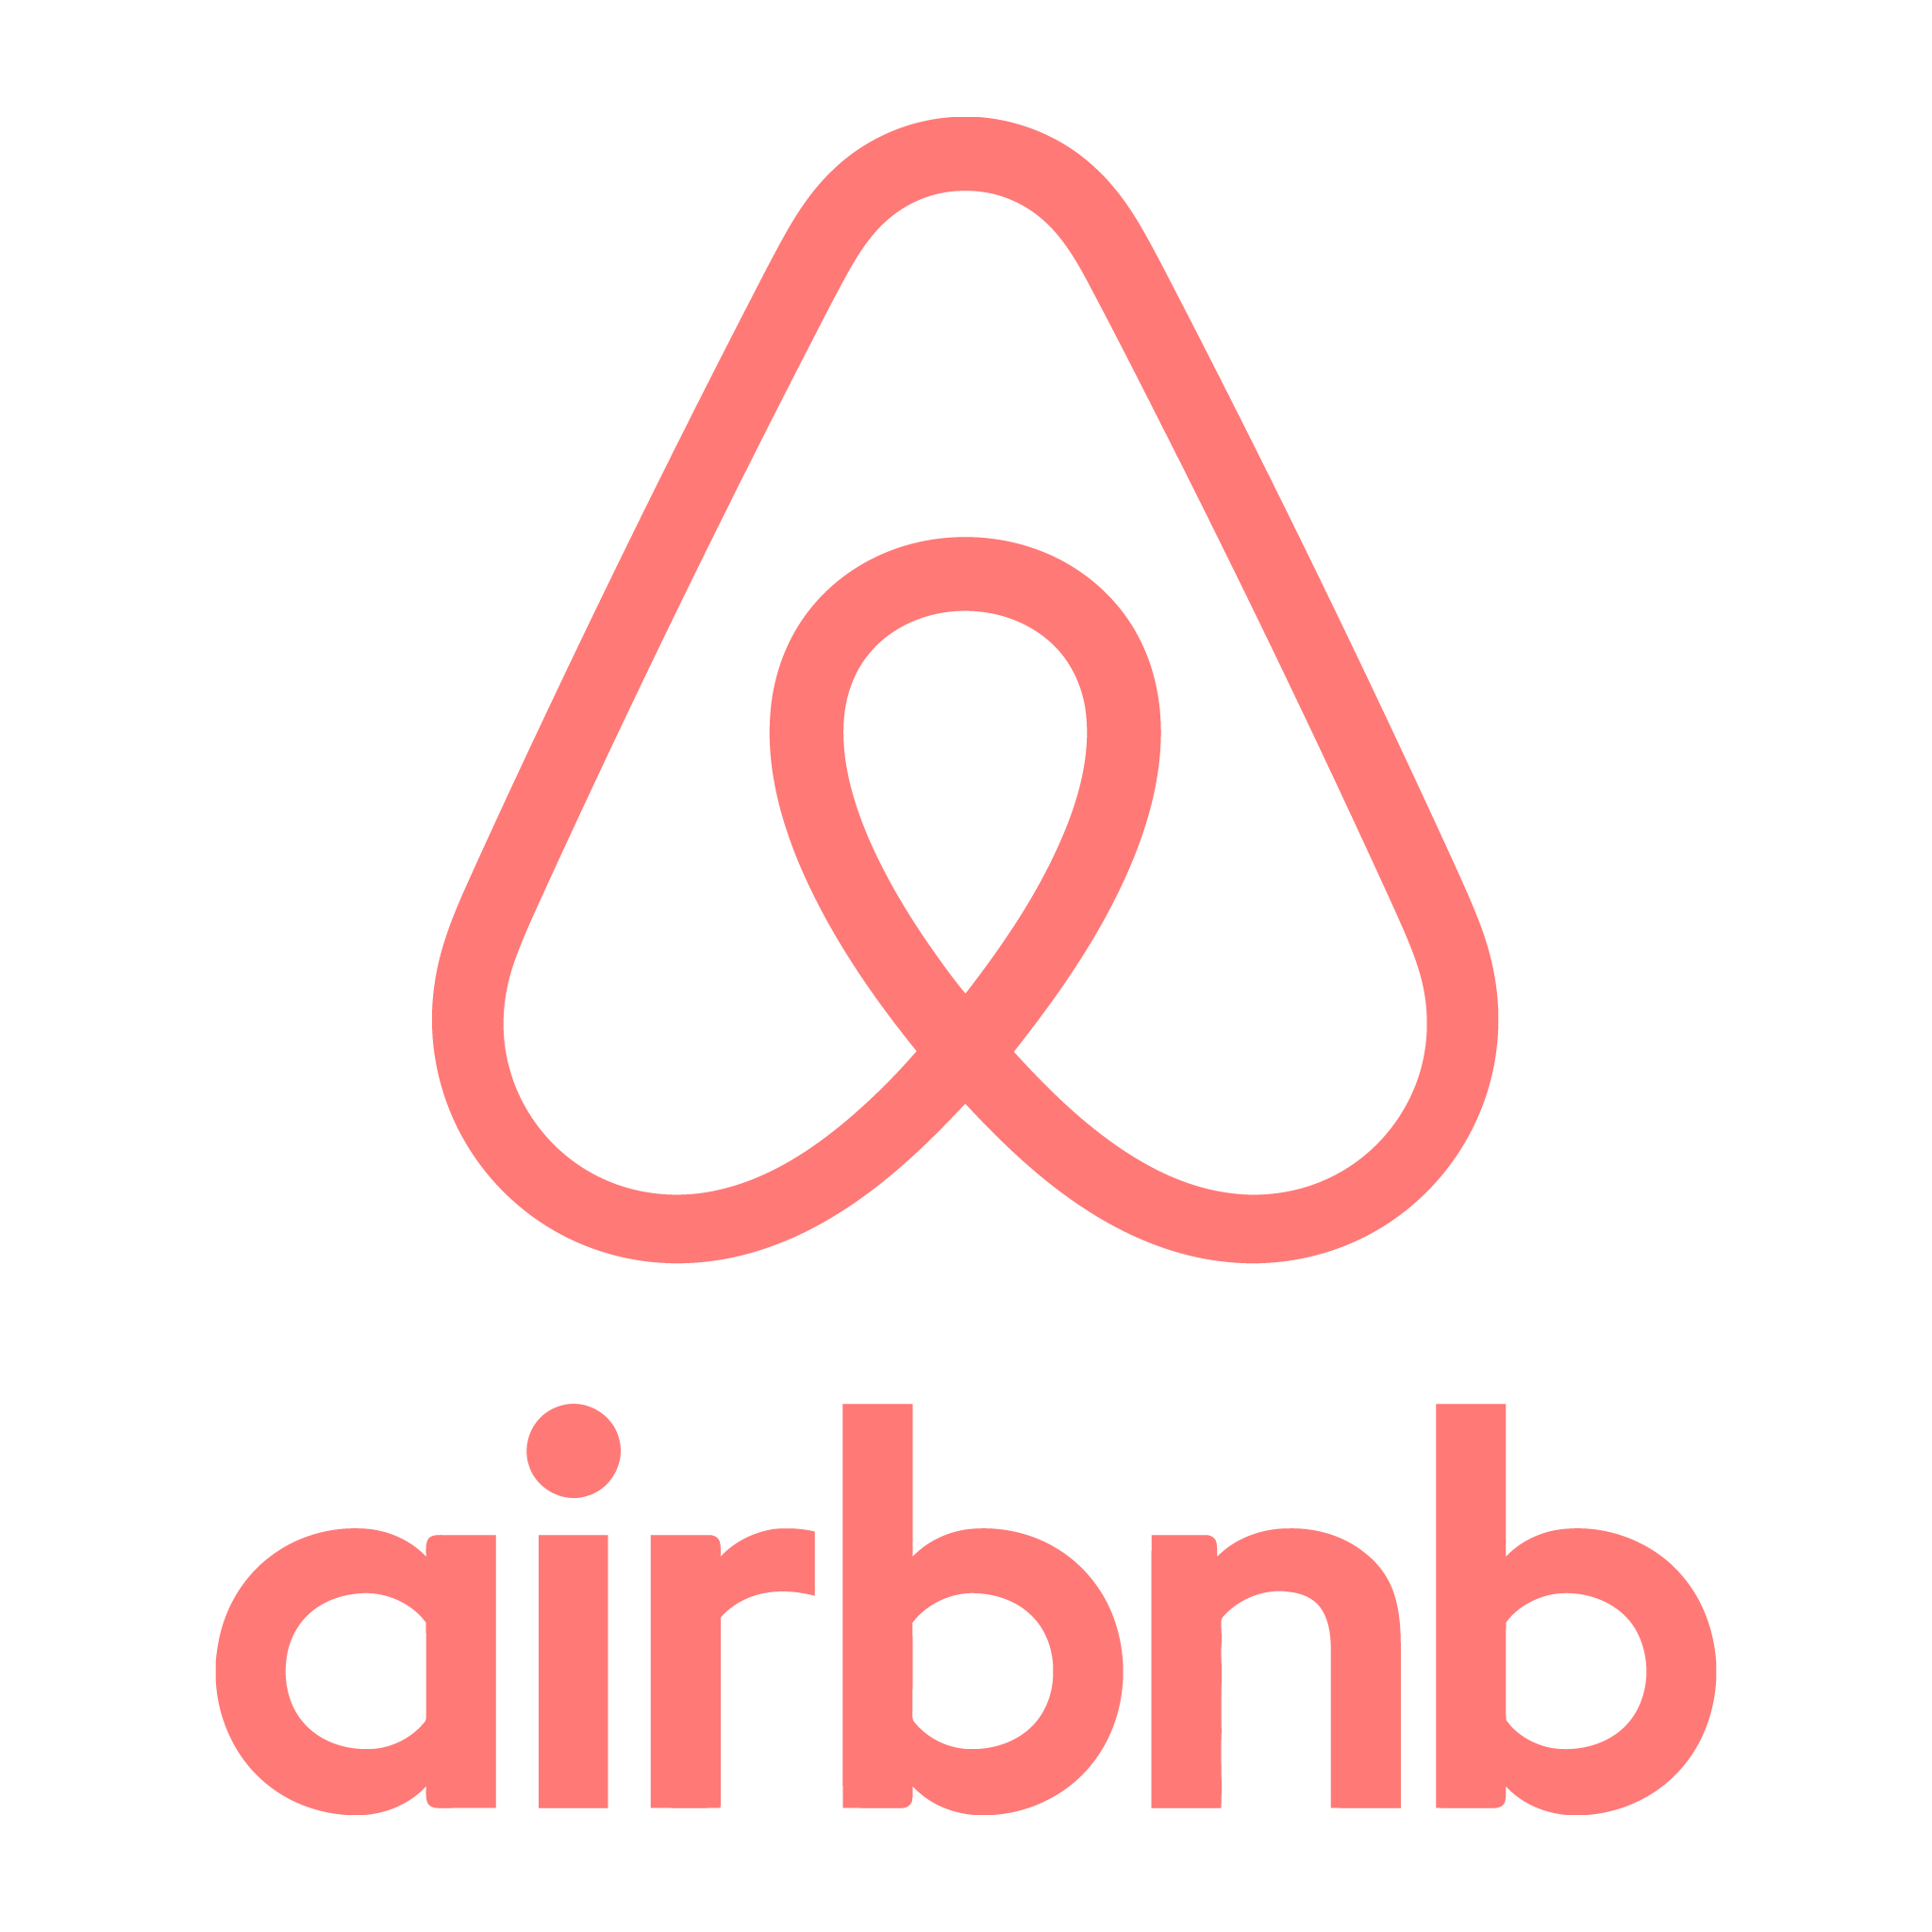 brasao do airbnb